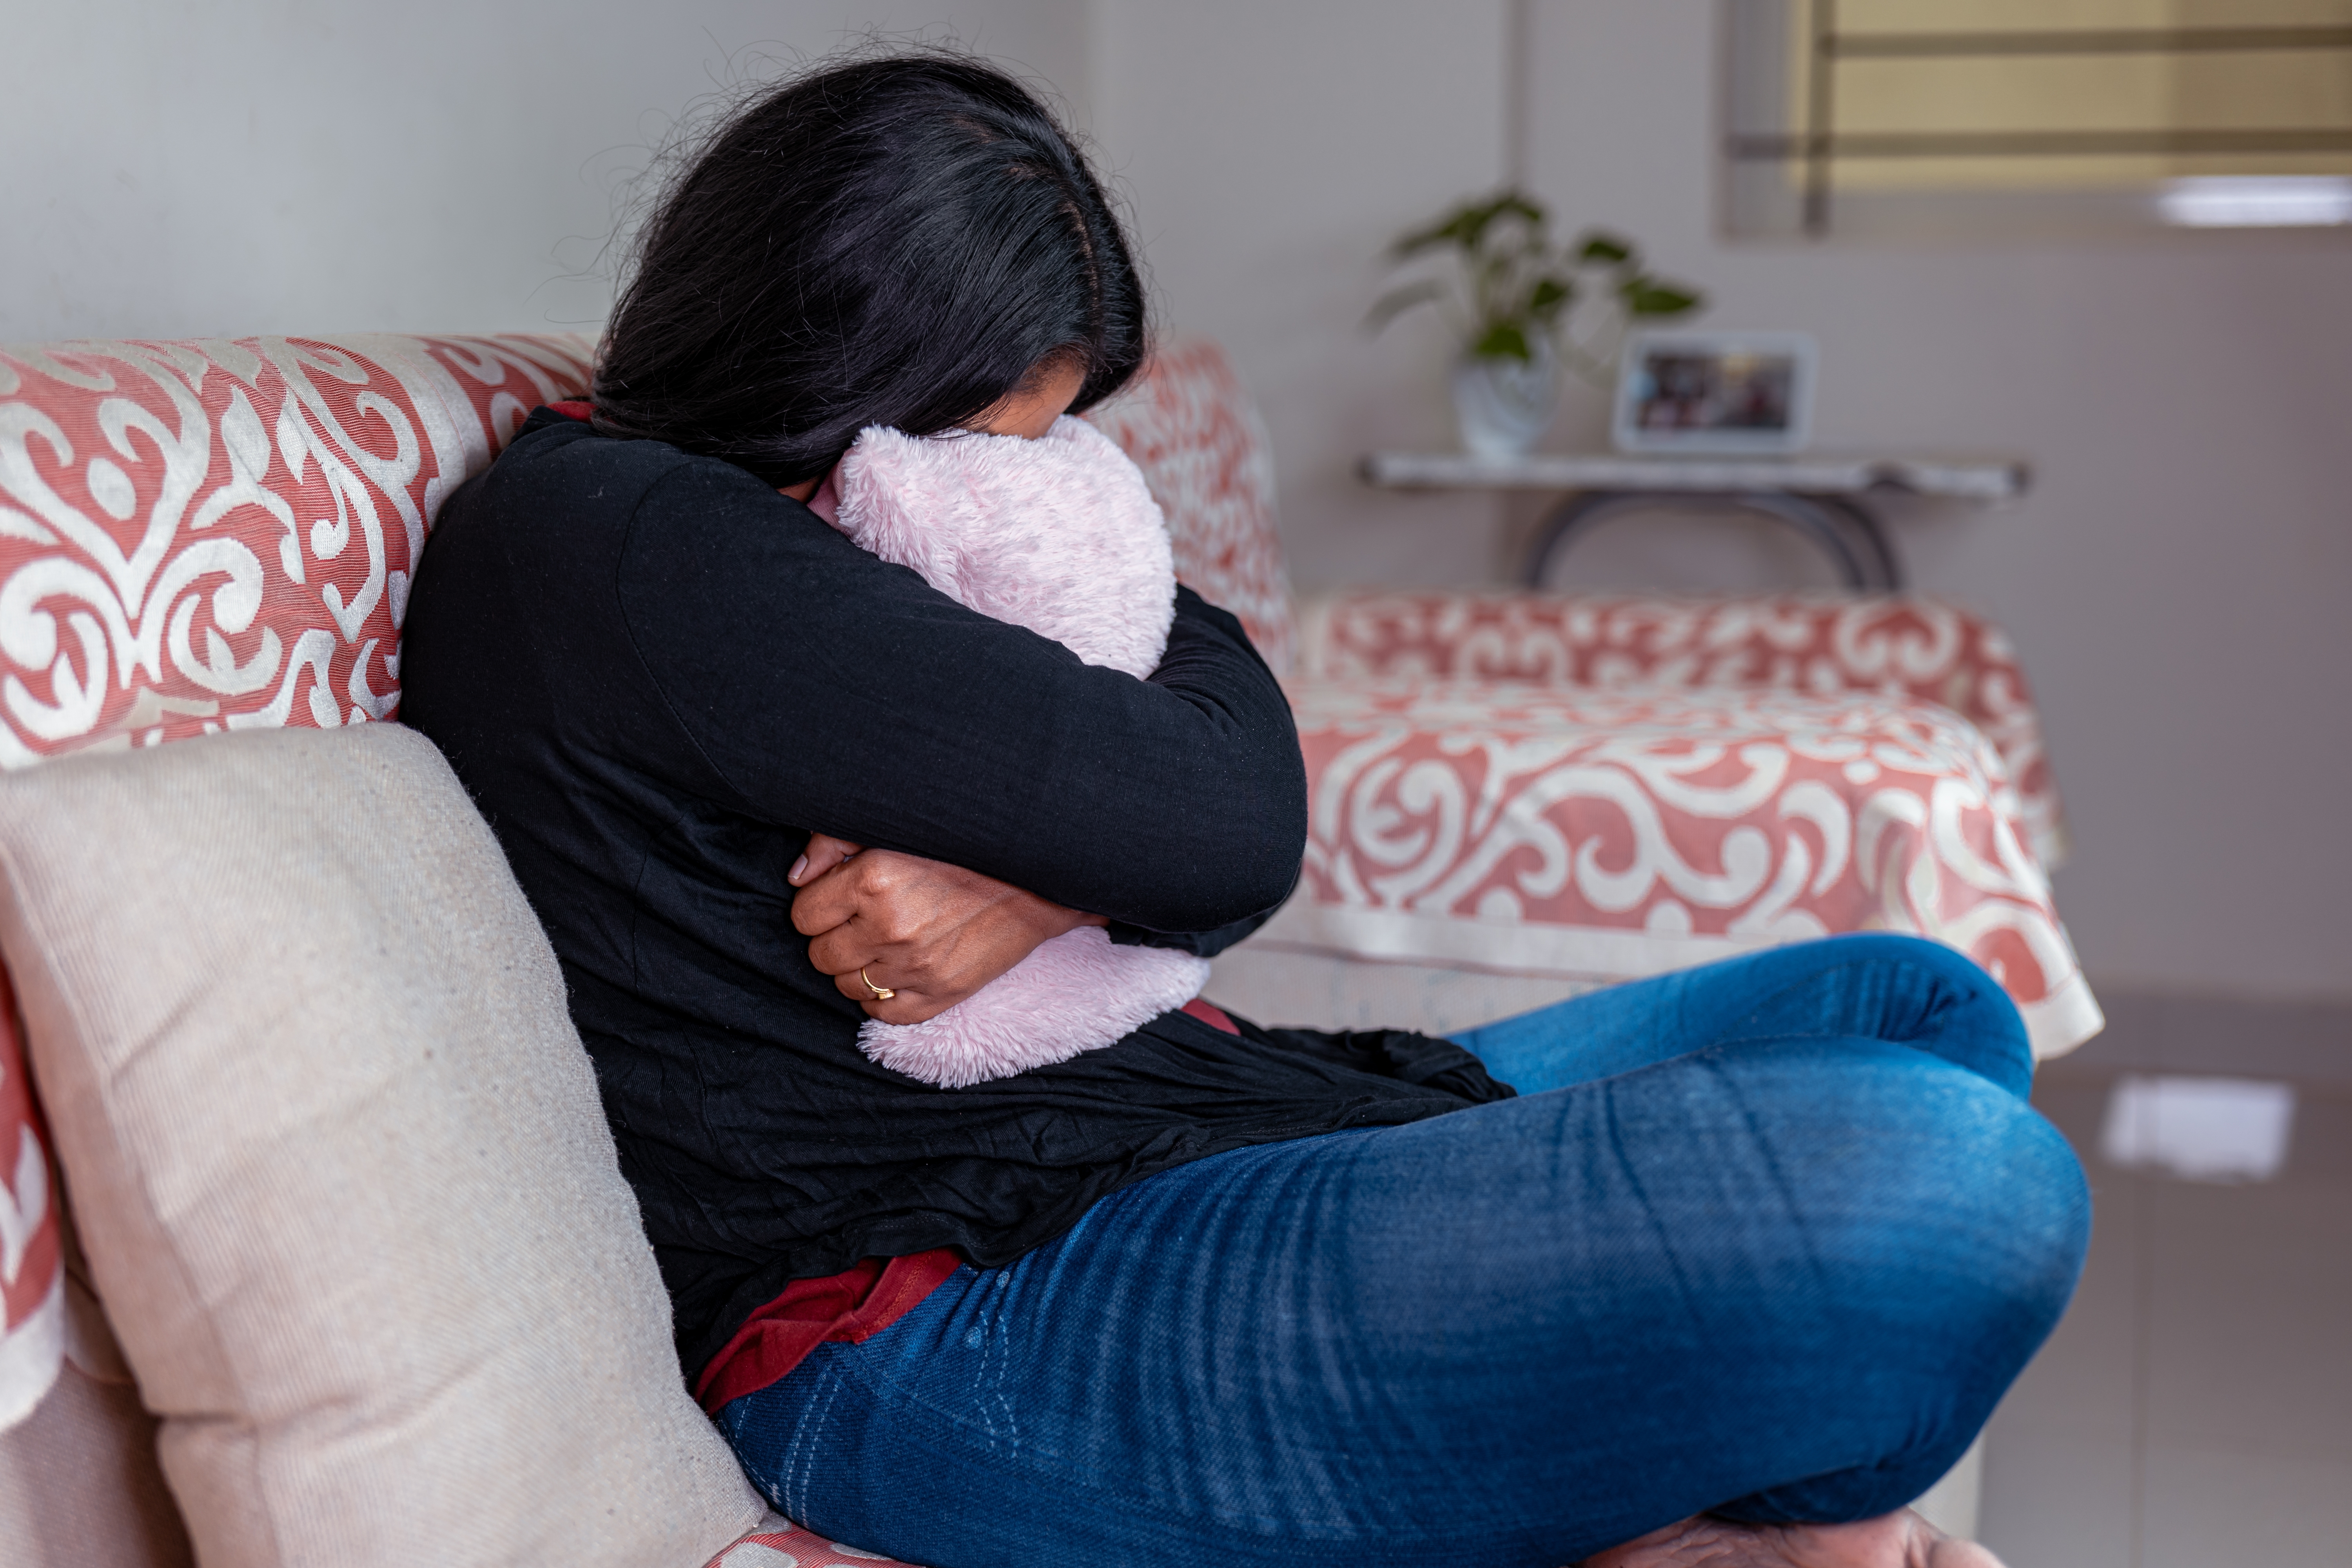 Woman sobbing into a pillow | Source: Shutterstock